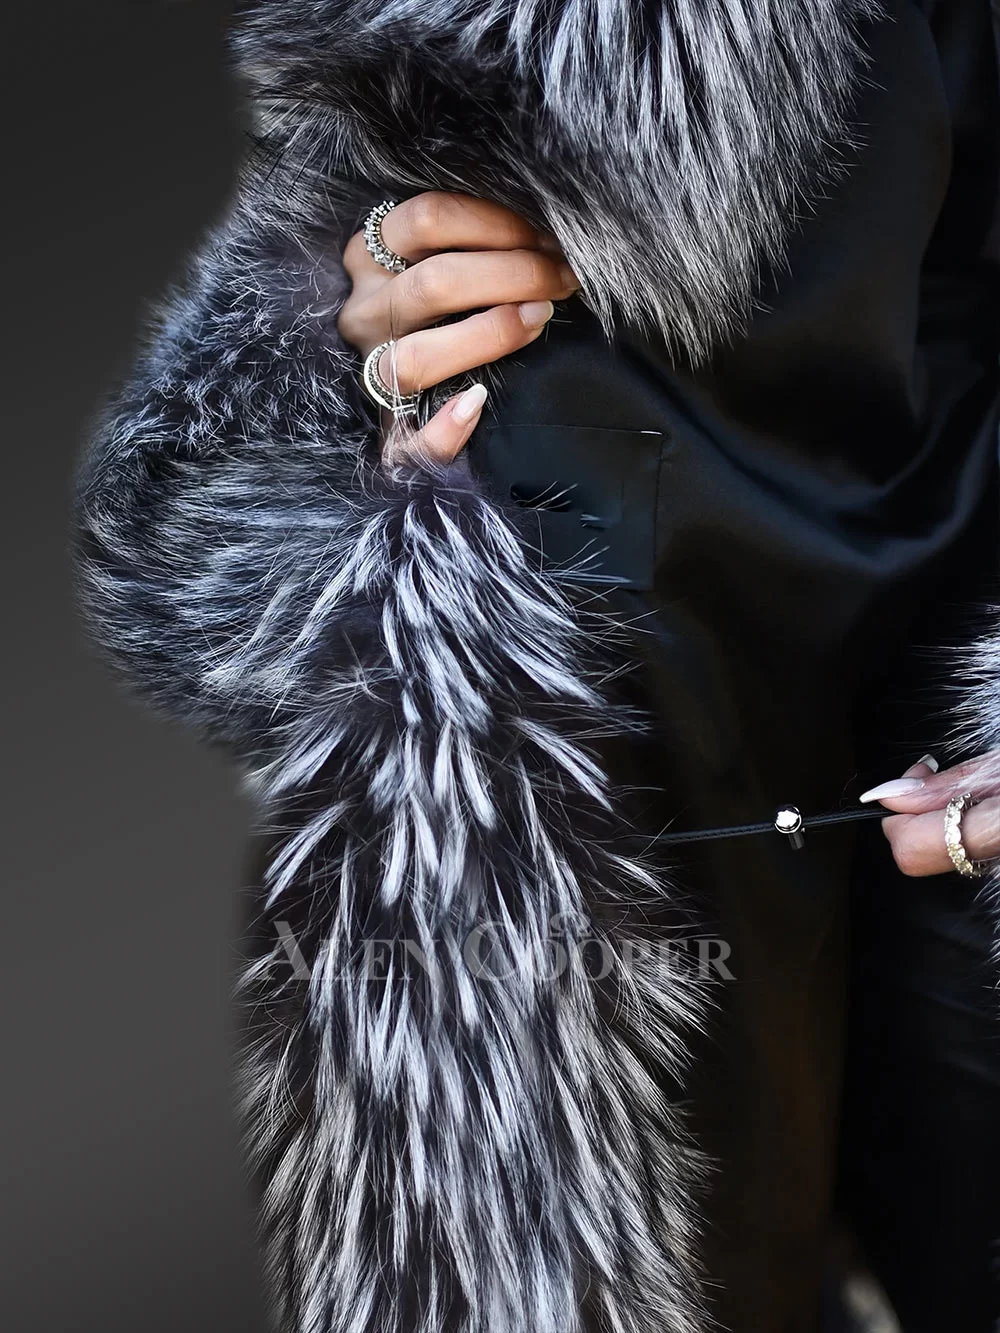 Fur coat jacket with Silver Metallic color mink & fox